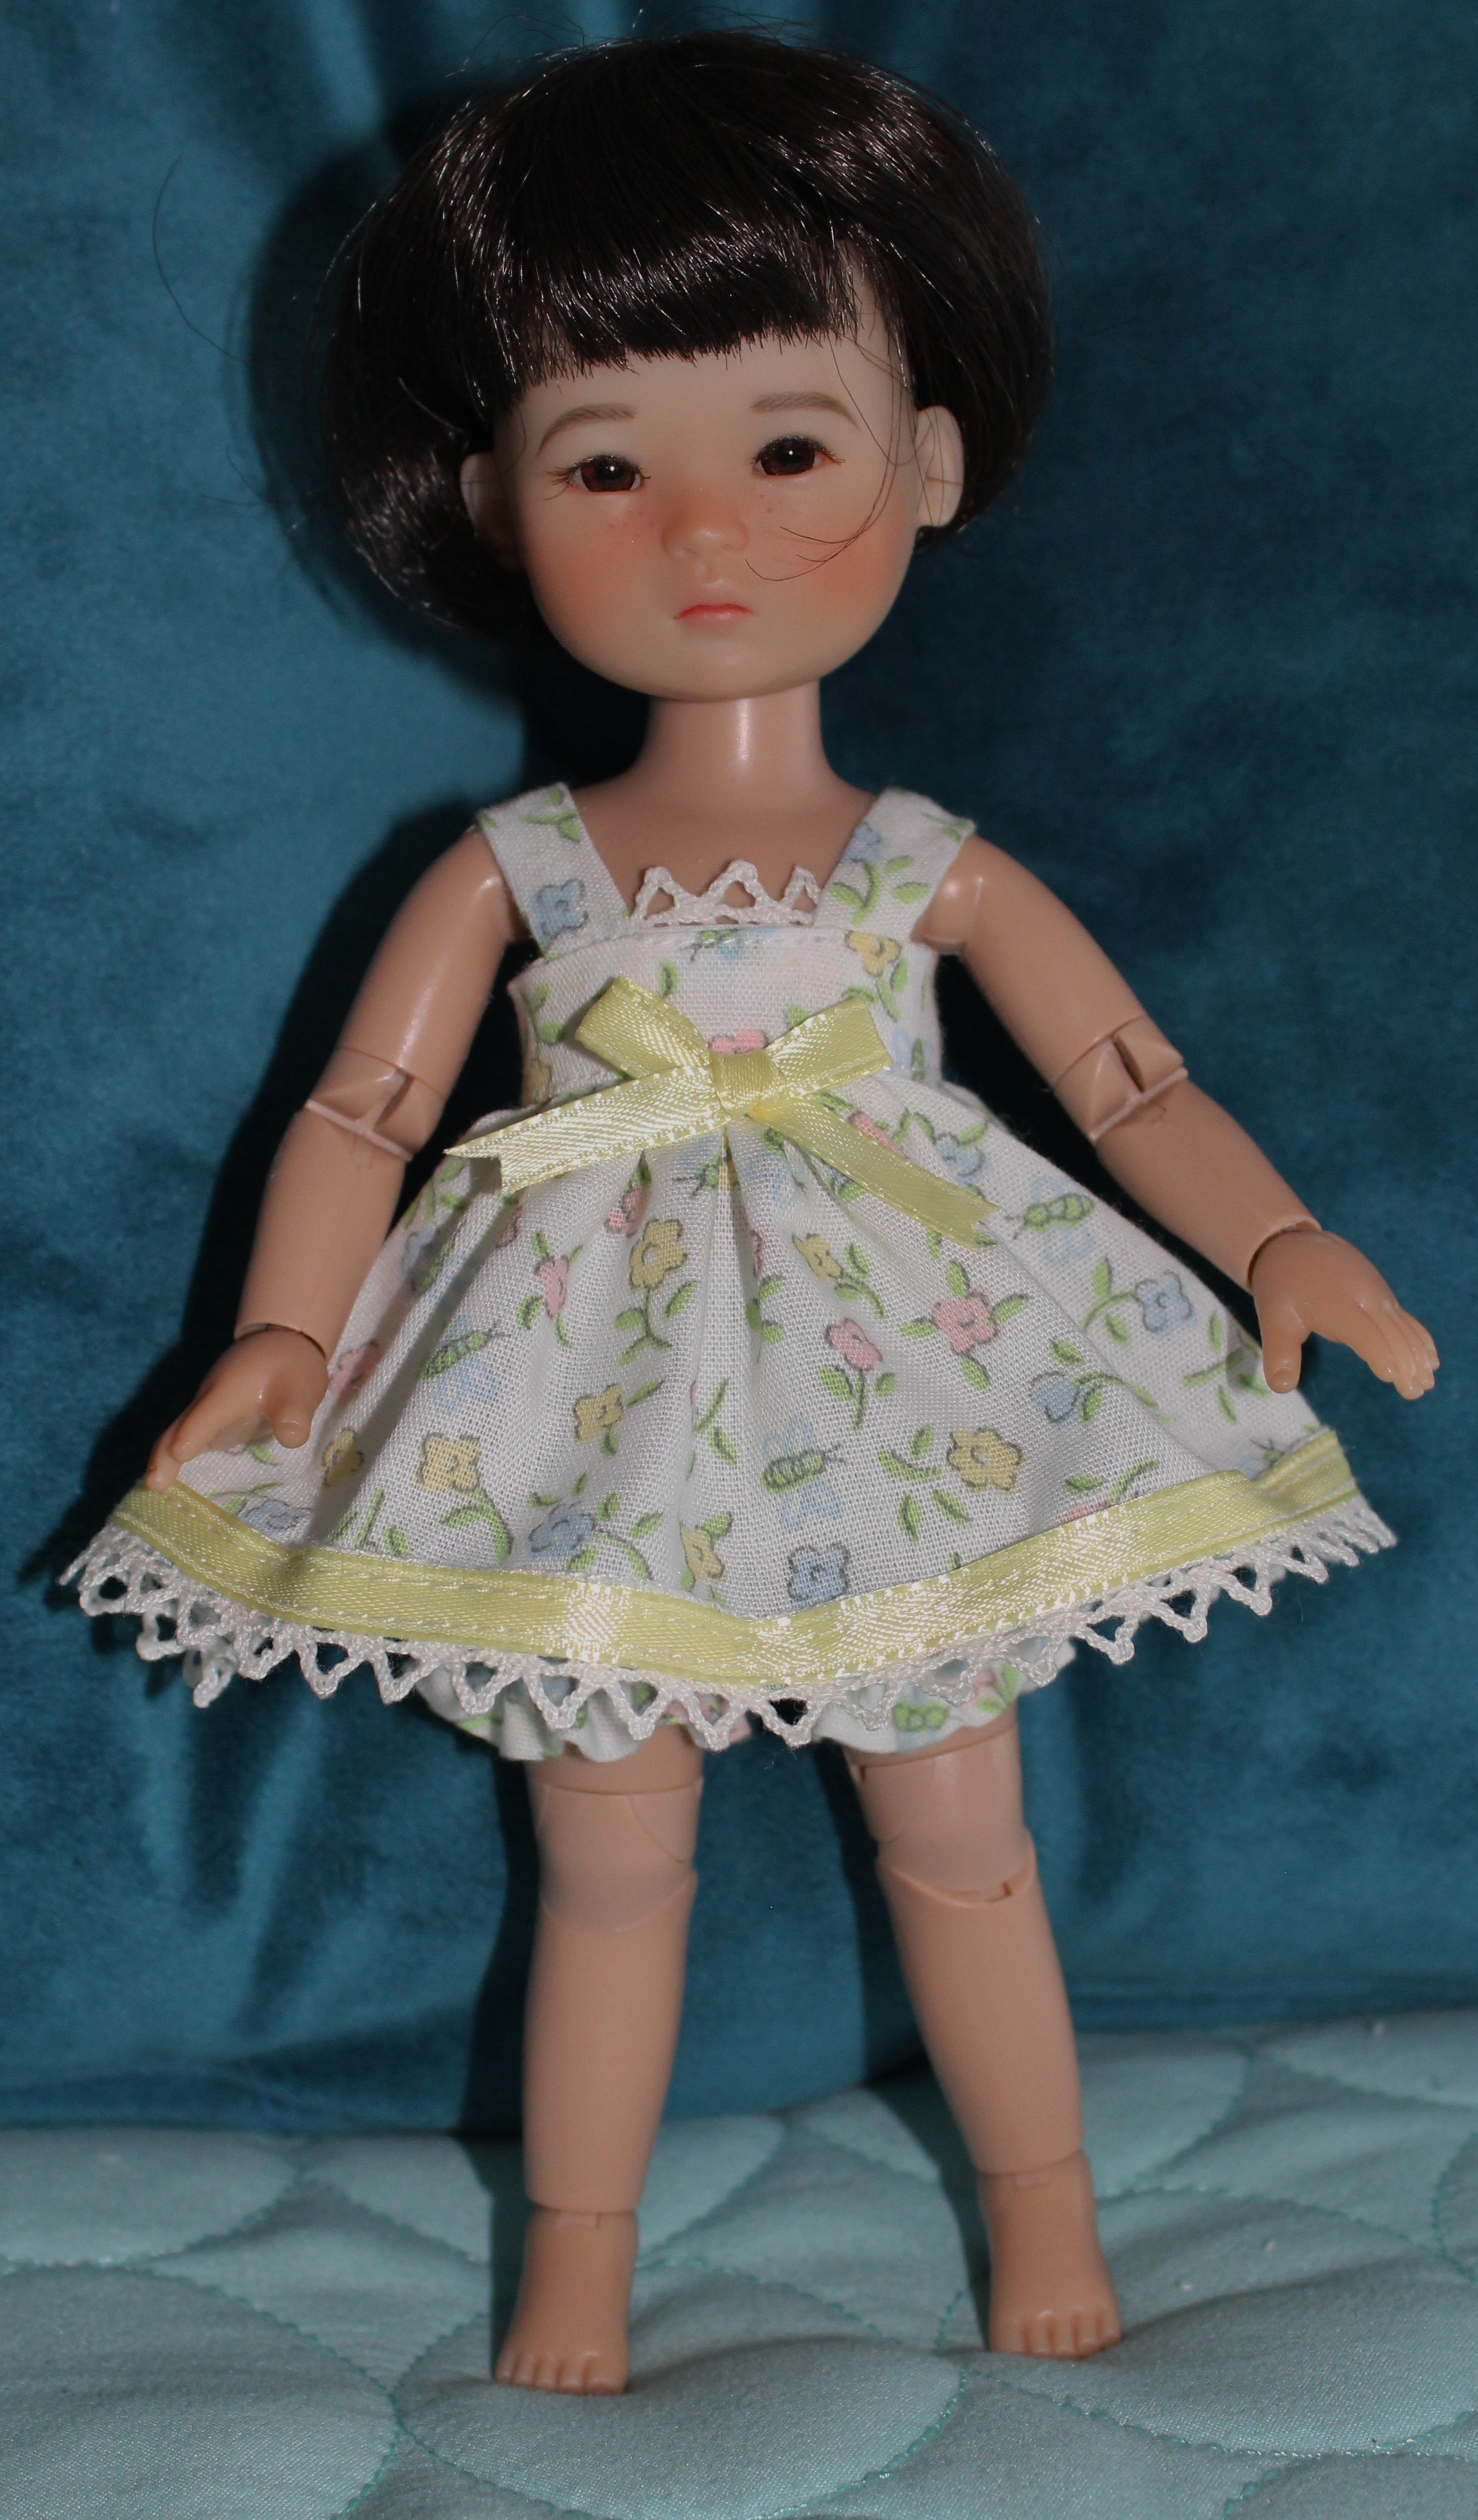 Baby Doll PJ's & Blankie fits Riley Kish/Ten Ping